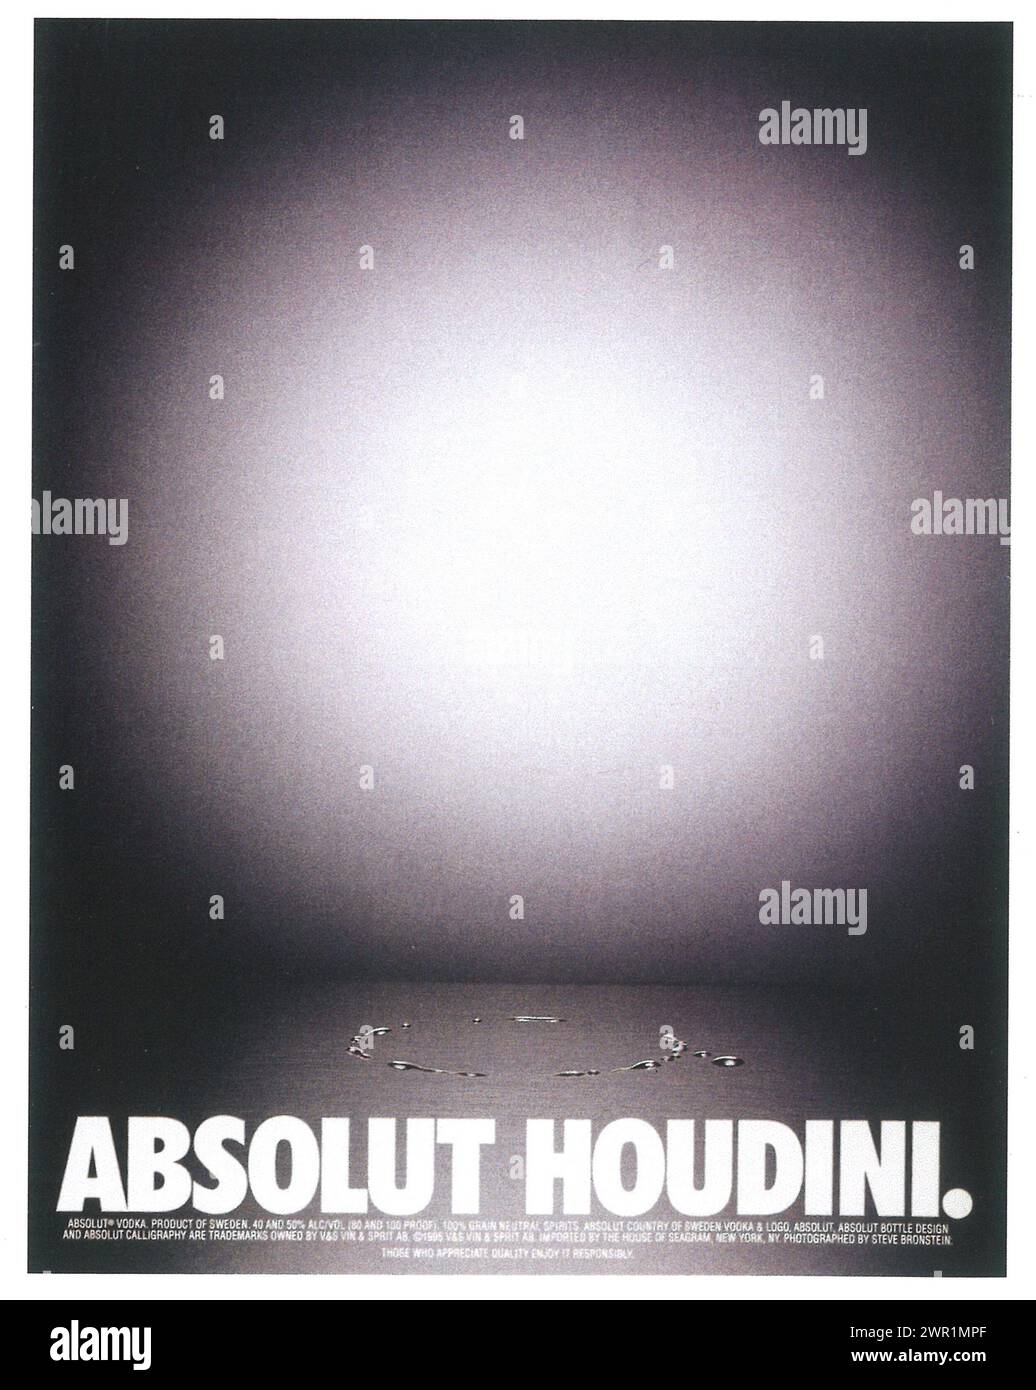 1996 Absolut Houdini Print Ad. Stock Photo